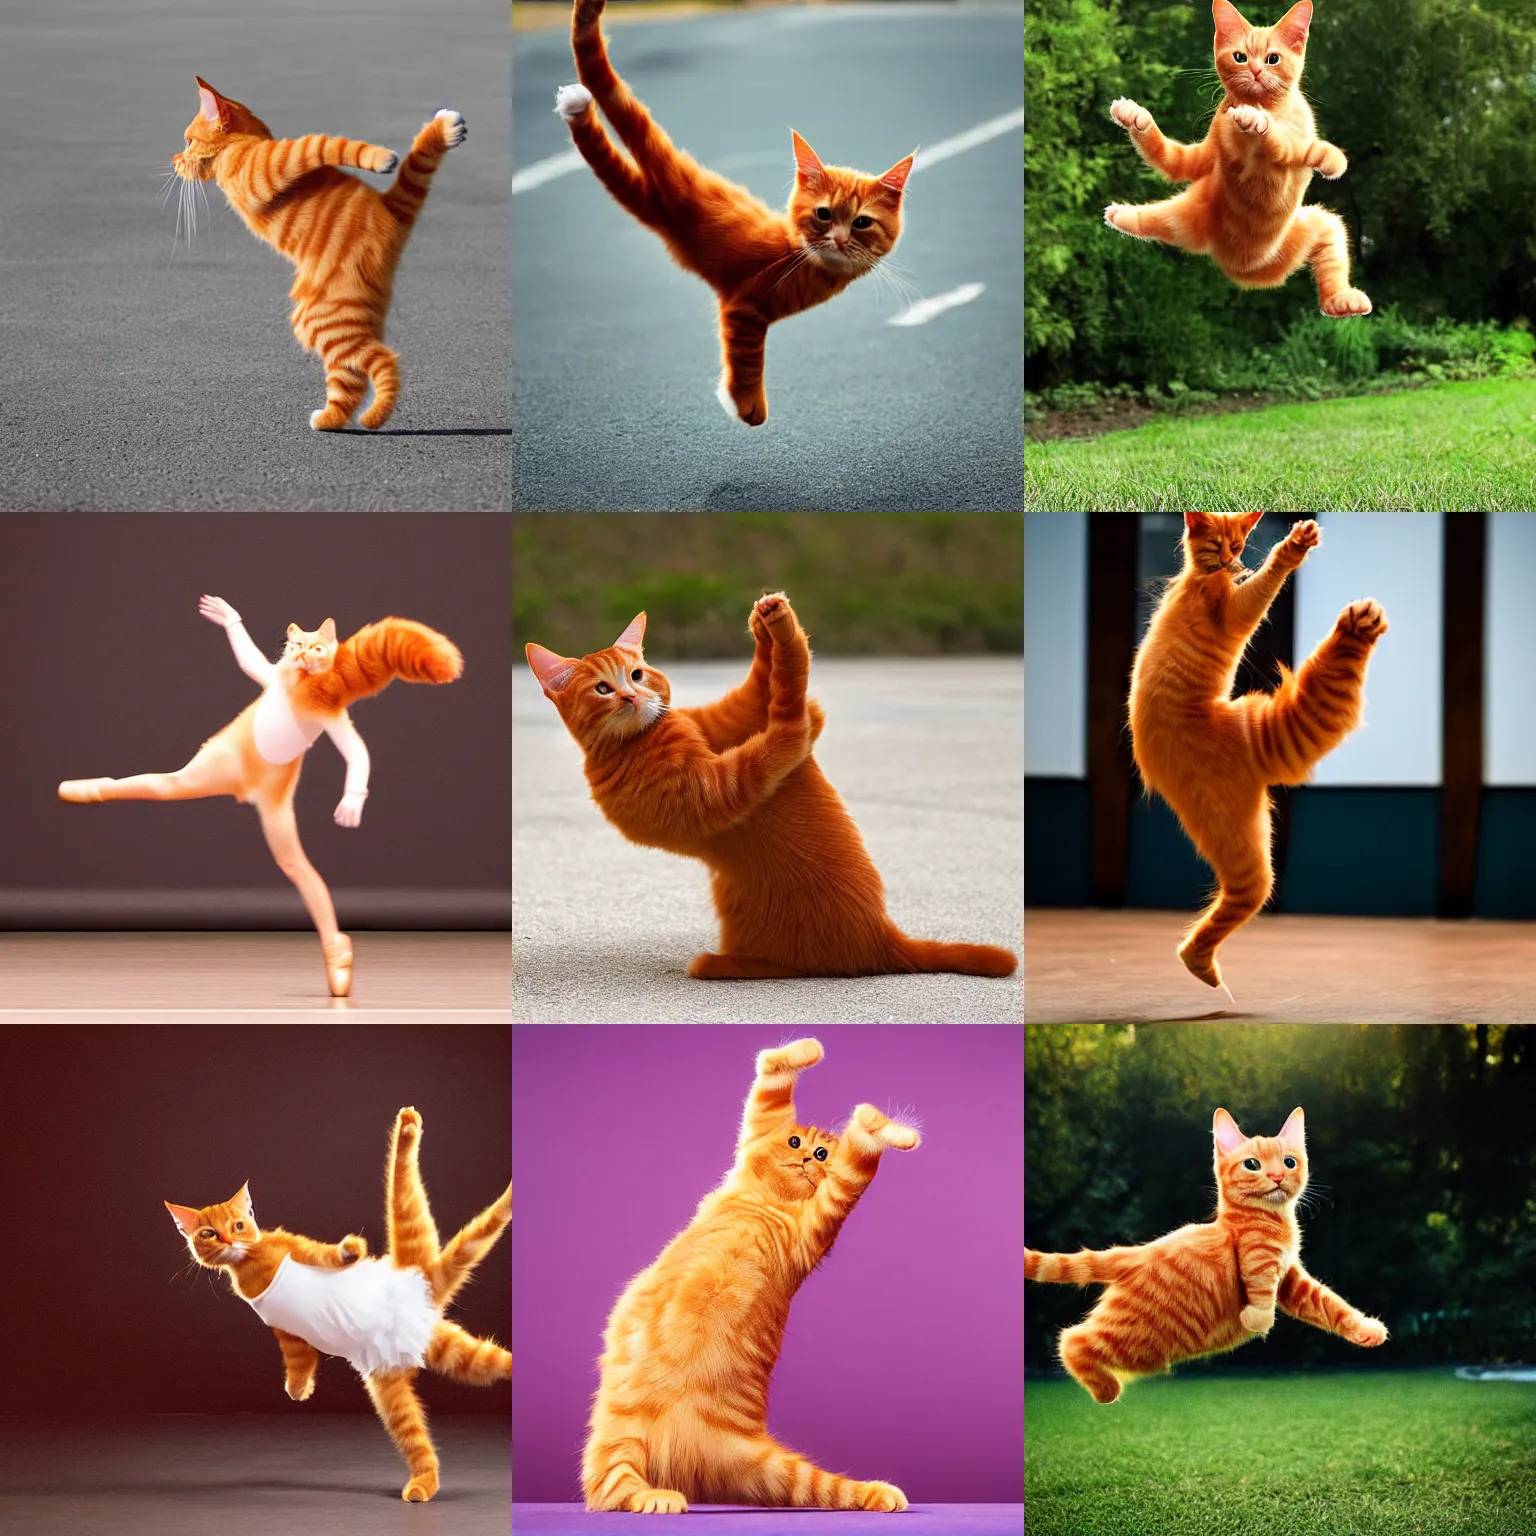 Prompt: ginger cat doing ballet, photograph, award winning